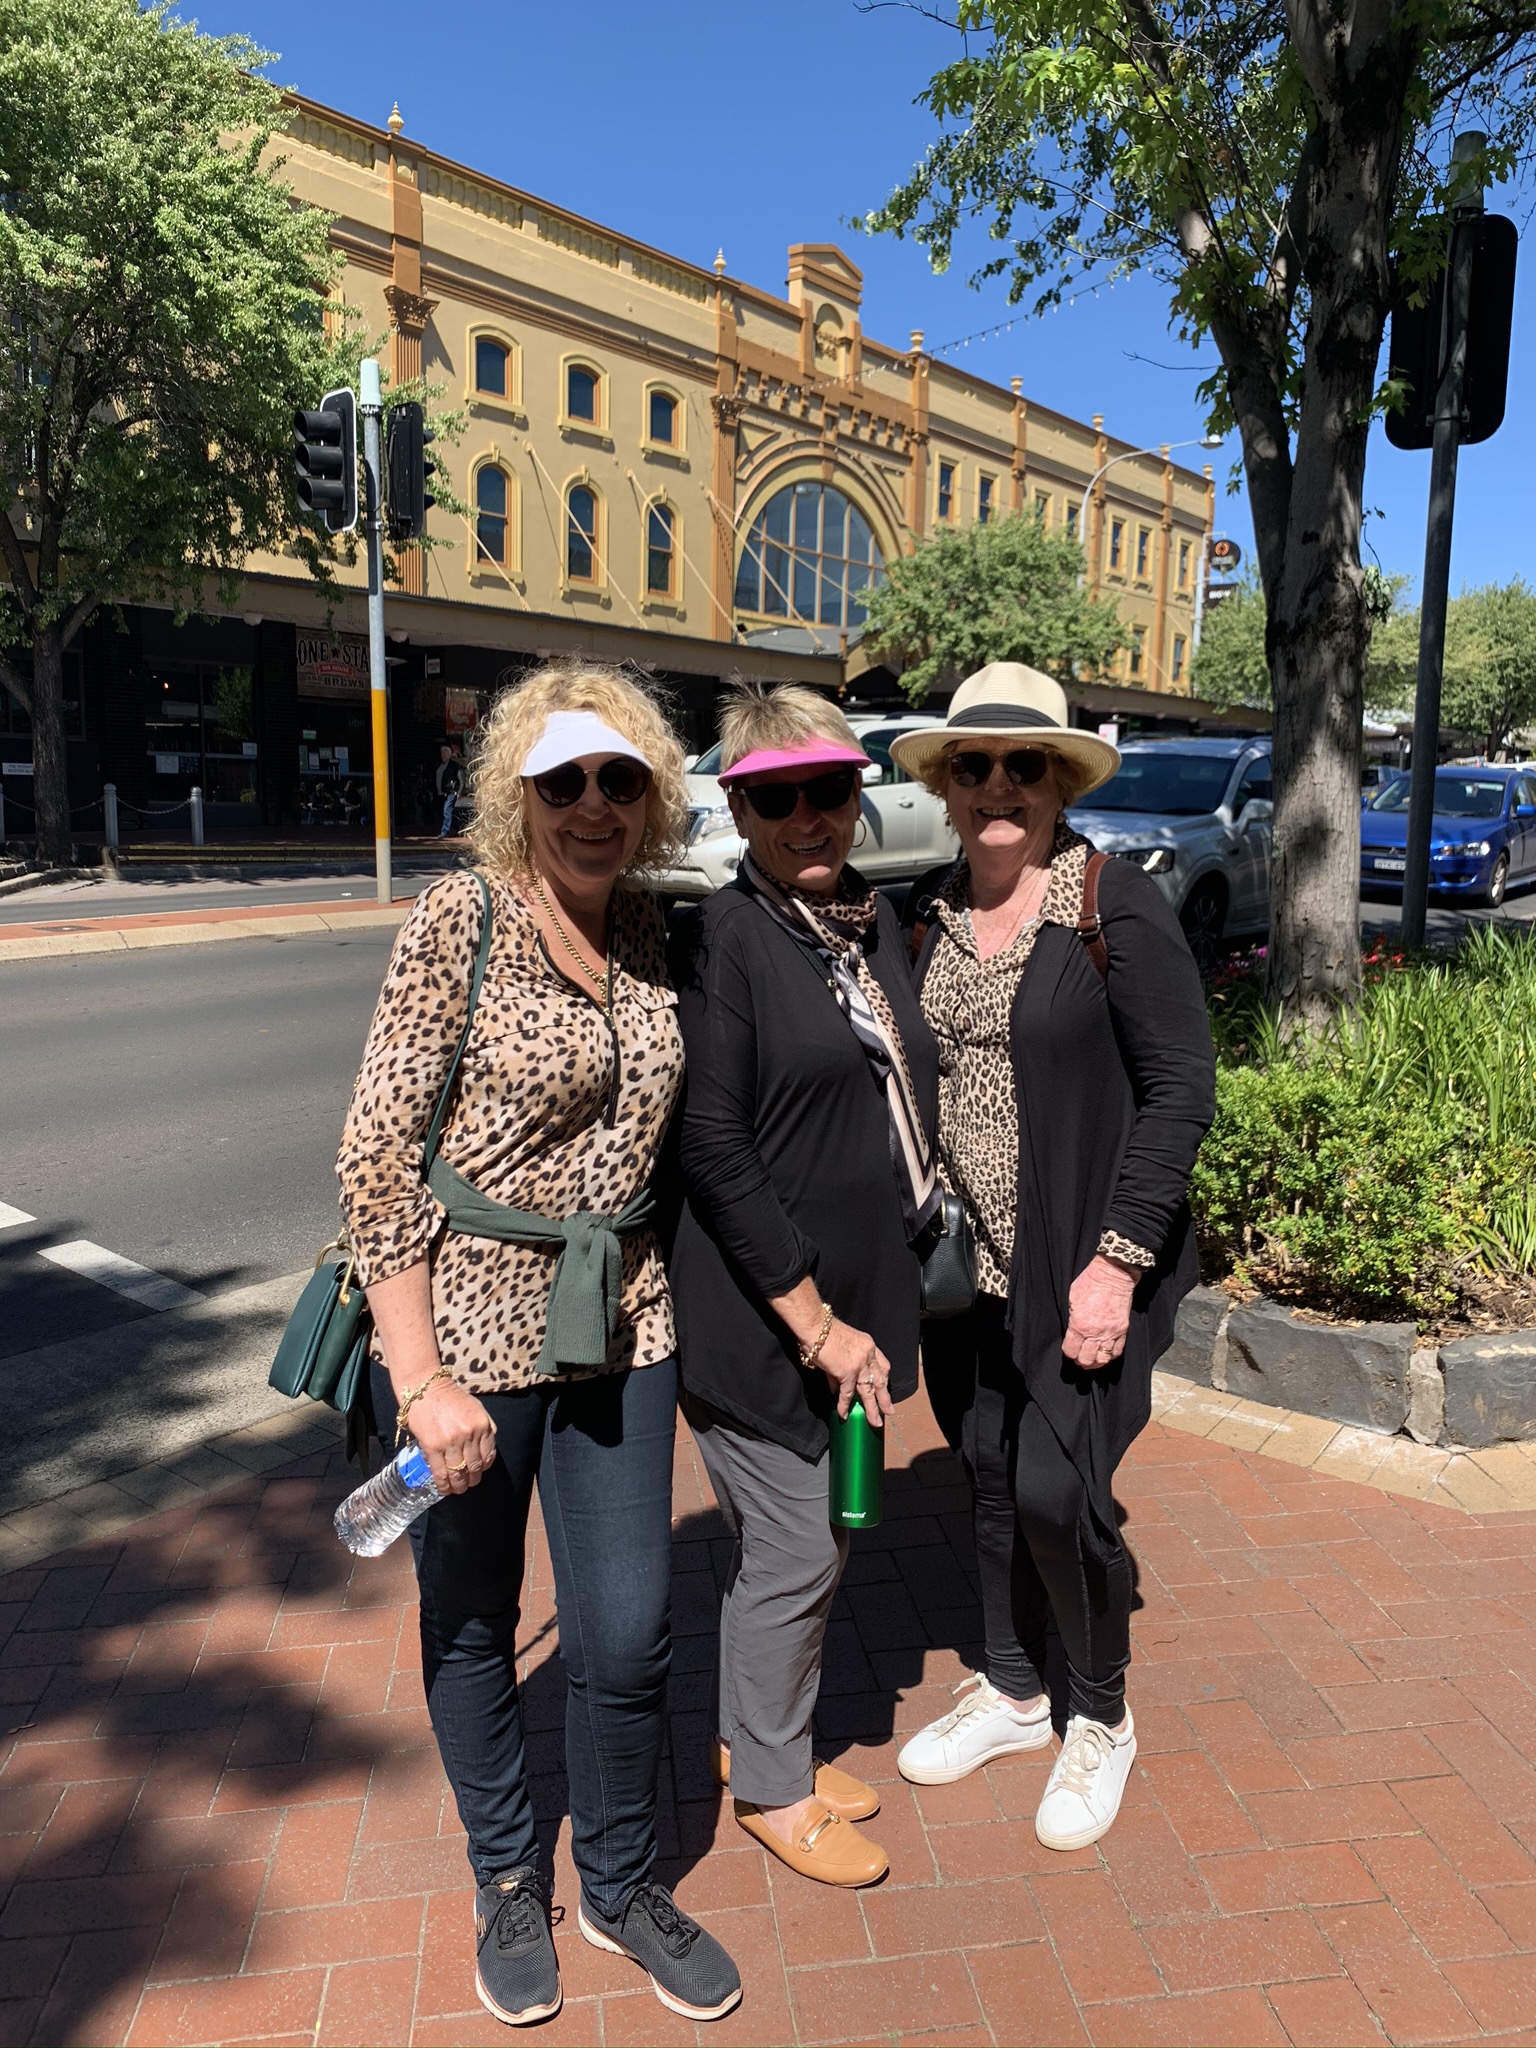 3 ladies standing in front of historic building